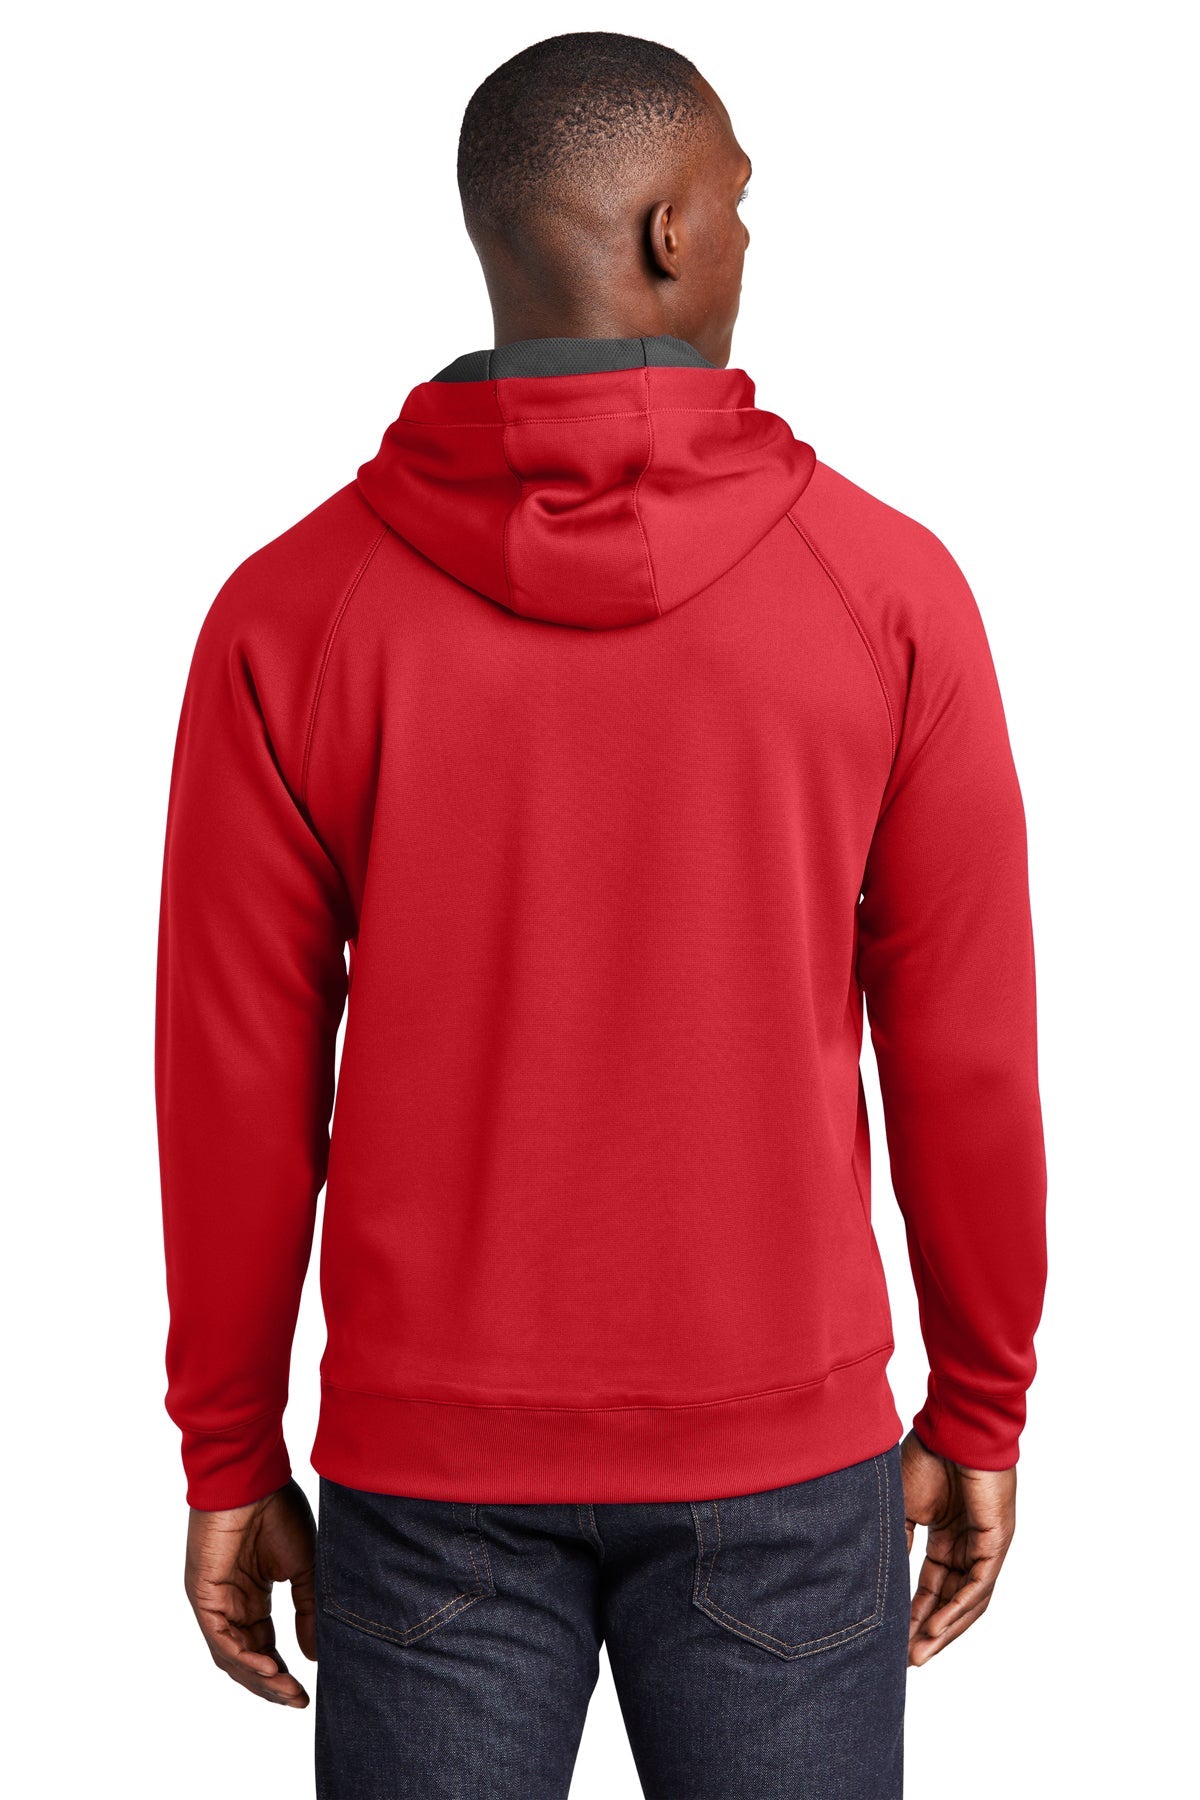 sport-tek_st250 _true red_company_logo_sweatshirts